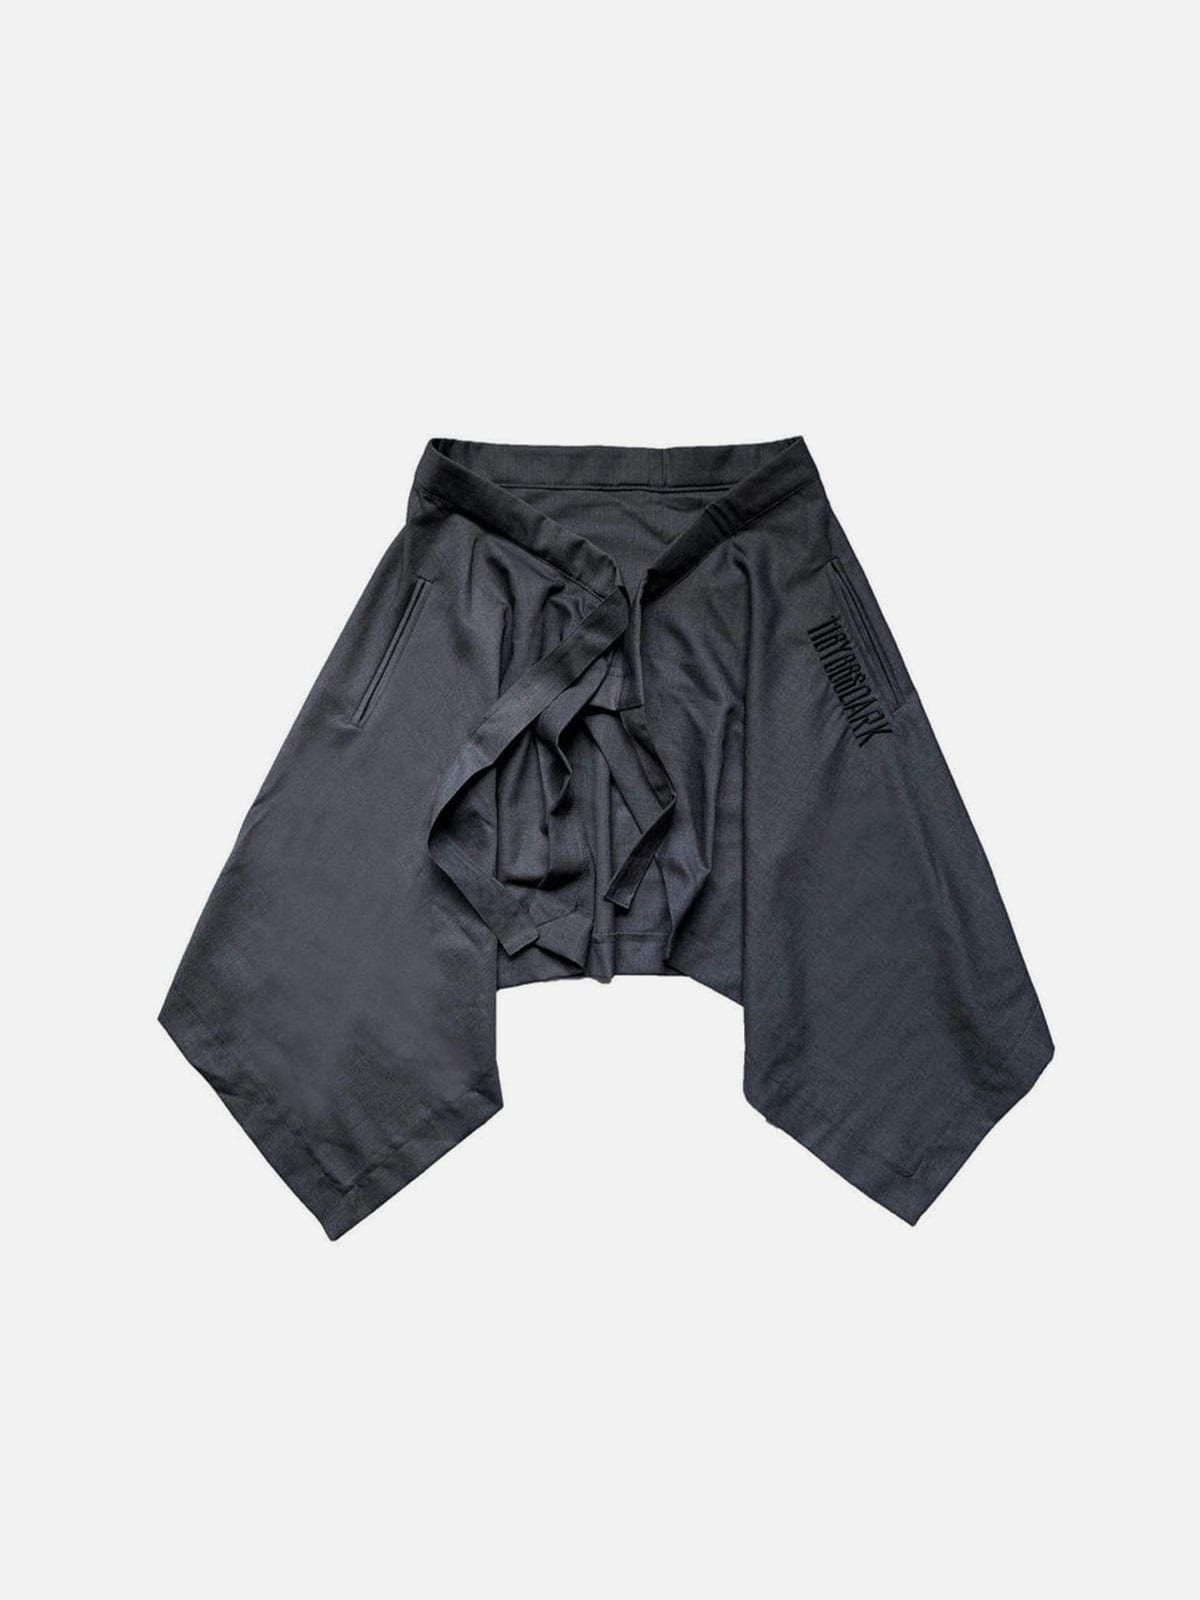 “Do Whatever You Want” Shorts Streetwear Brand Techwear Combat Tactical YUGEN THEORY